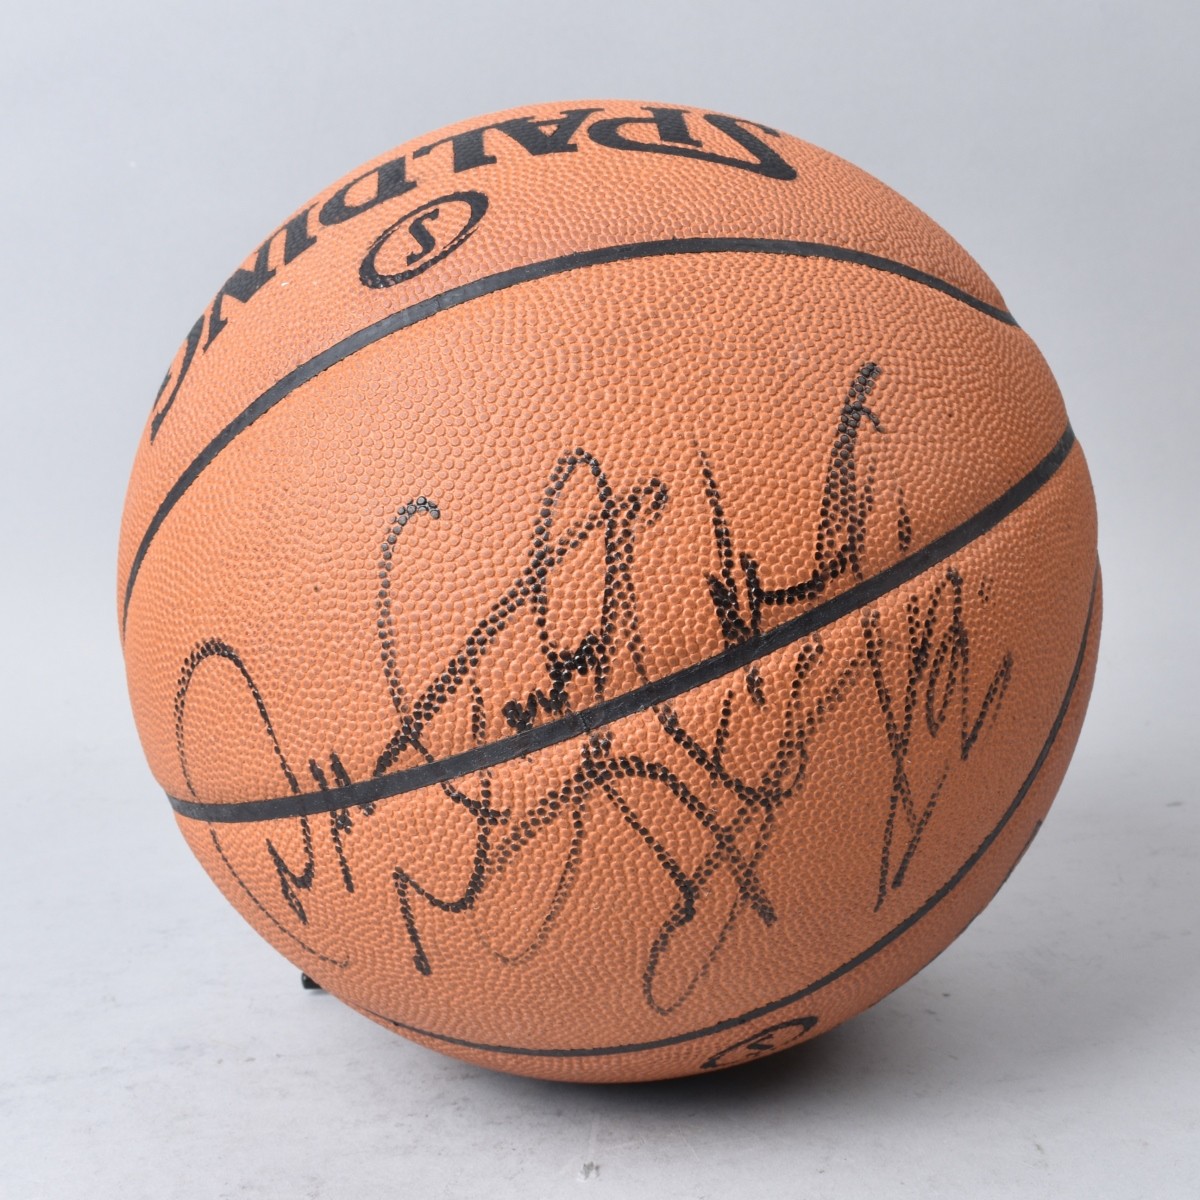 NBA Basketball signed by Dennis Rodman